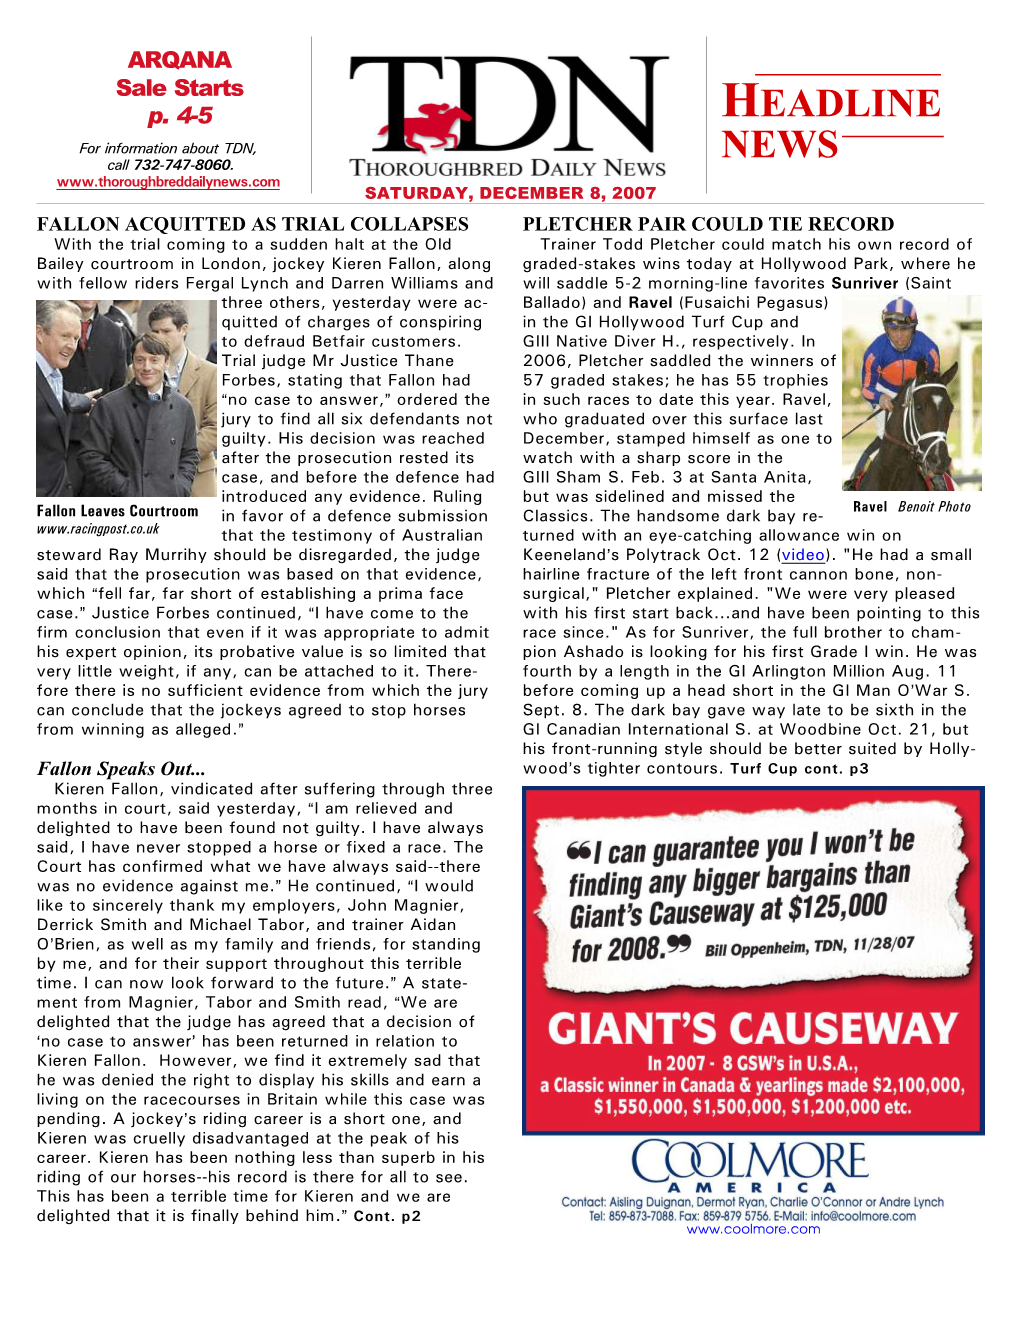 HEADLINE NEWS • 12/8/07 • PAGE 2 of 8